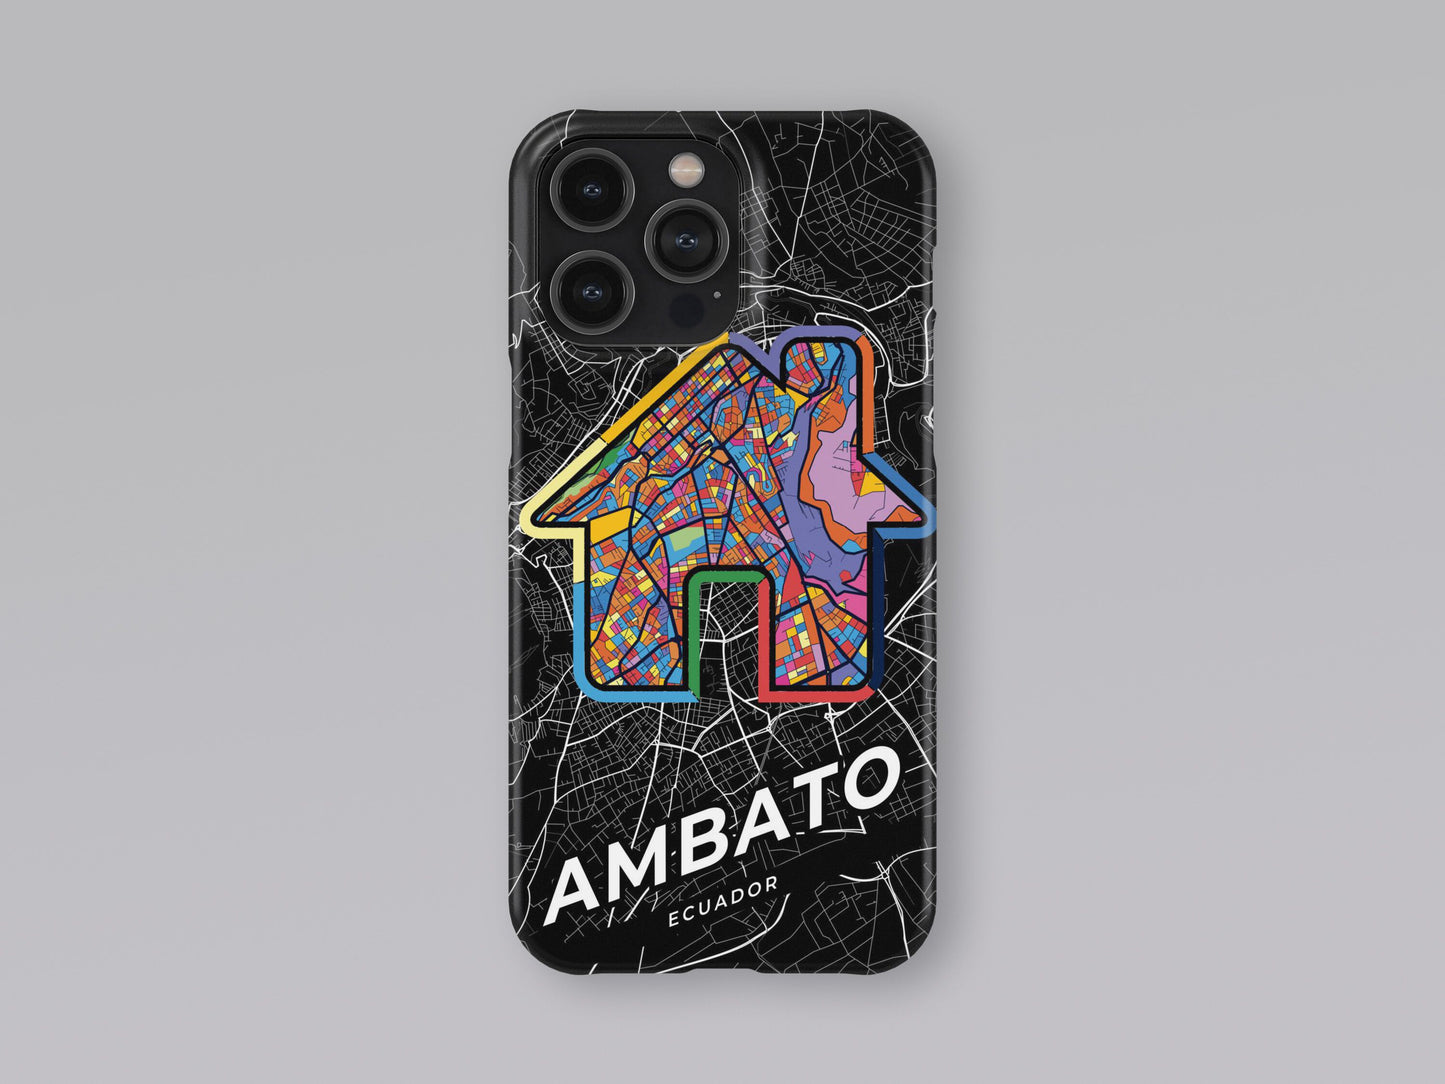 Ambato Ecuador slim phone case with colorful icon. Birthday, wedding or housewarming gift. Couple match cases. 3